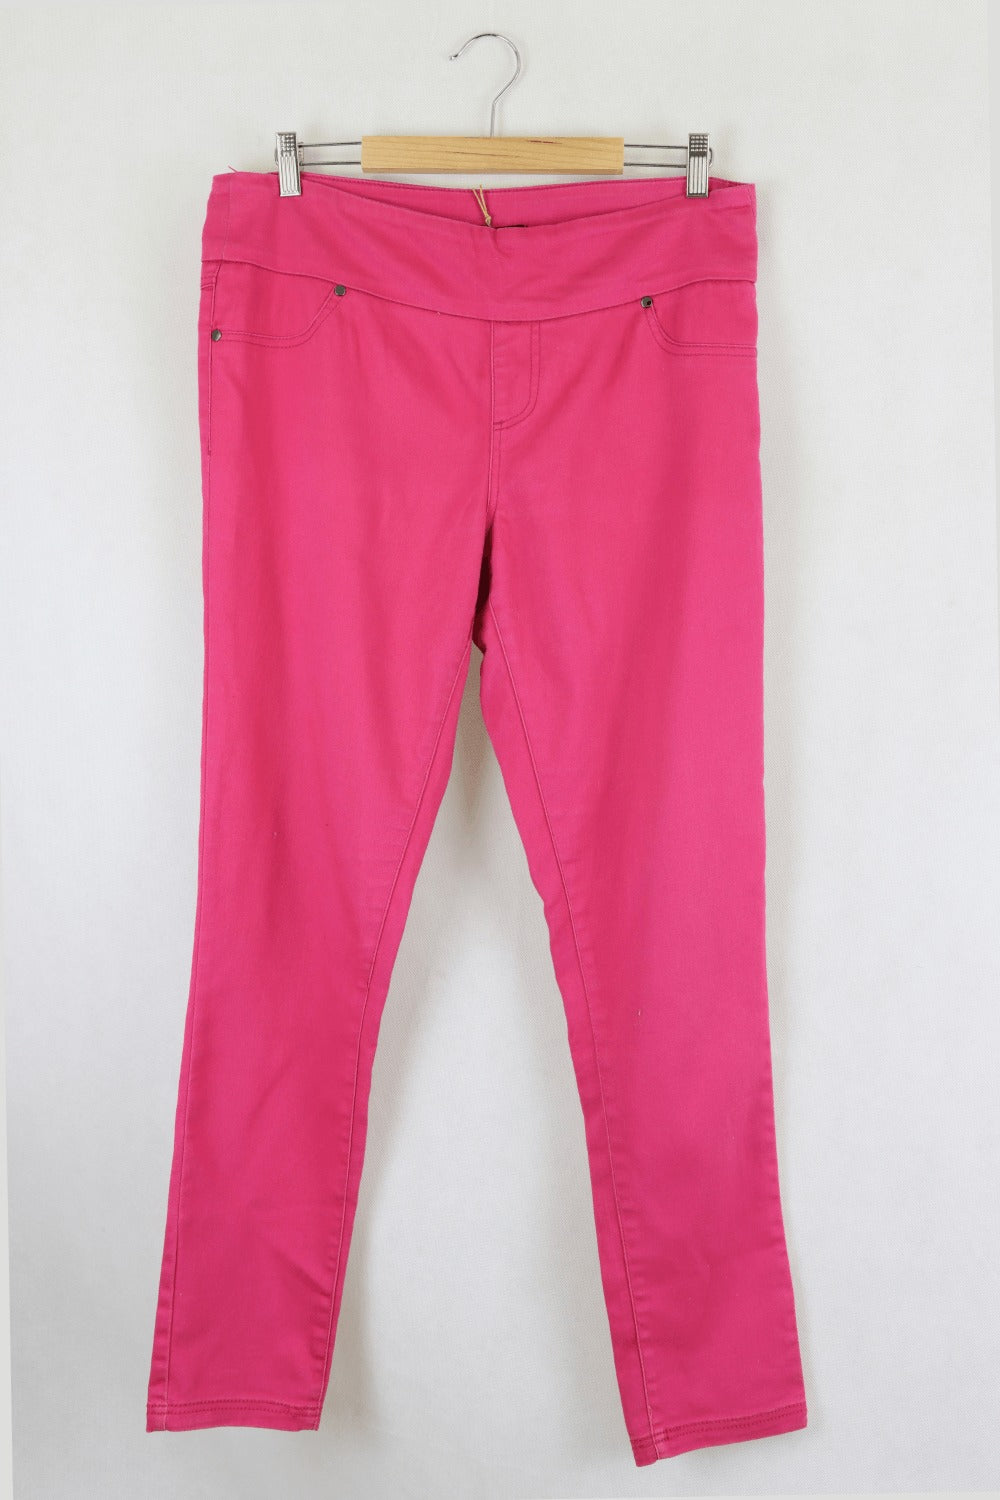 XRD  Denim Pink Pants 14